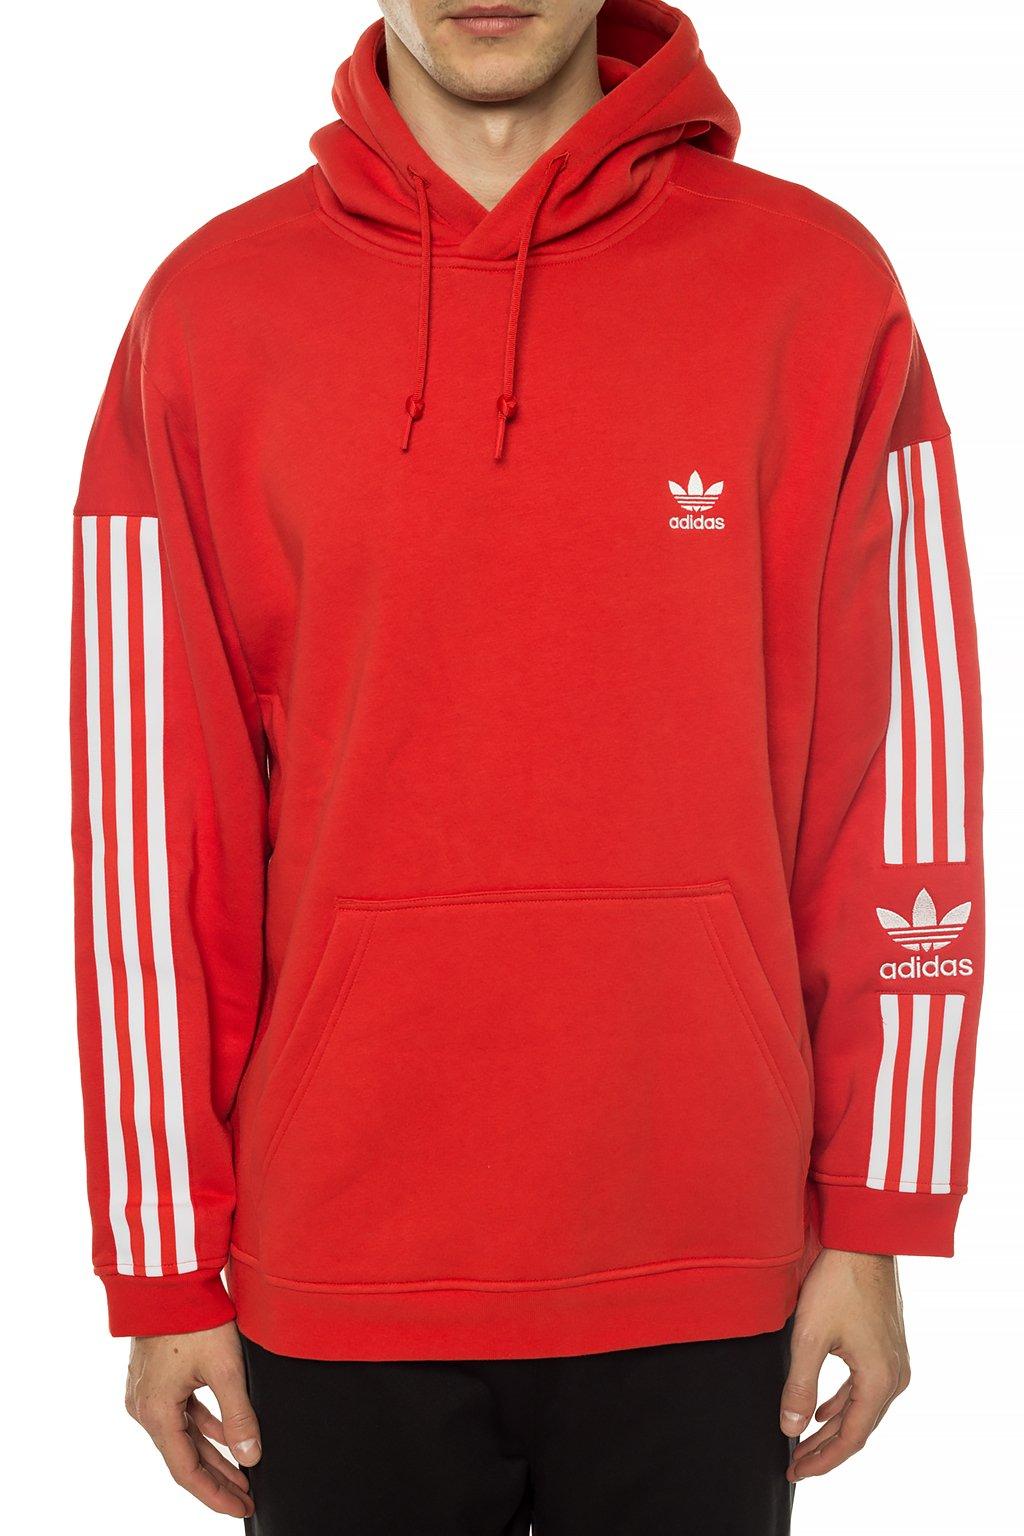 adidas Originals Cotton Sweatshirt With Logo Red for Men - Lyst